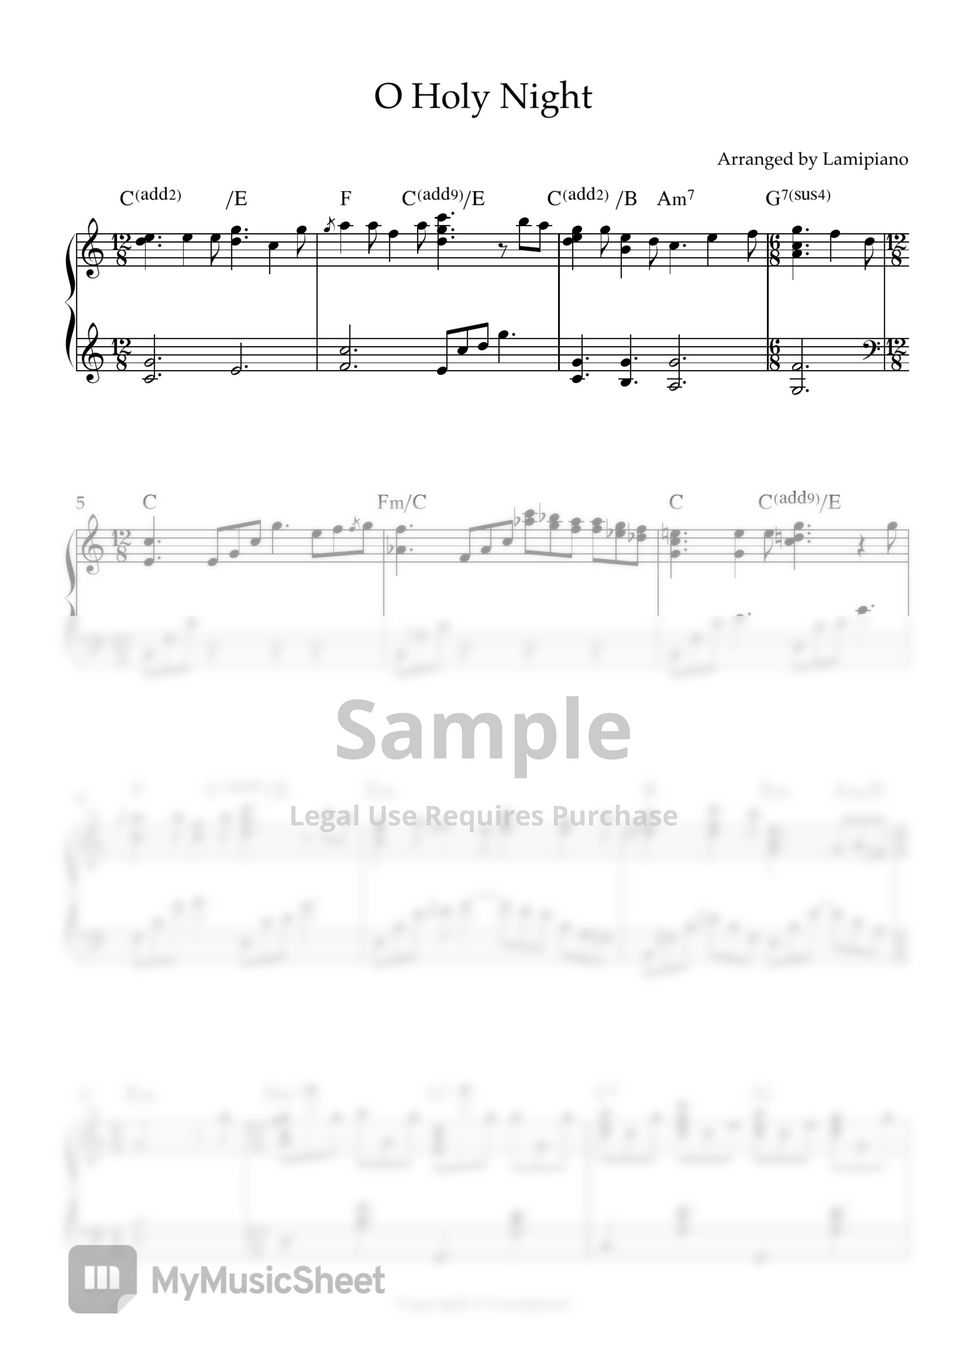 Adolphe Charles Adam - O Holy Night (Carol / C key / Chords) by Lamipiano